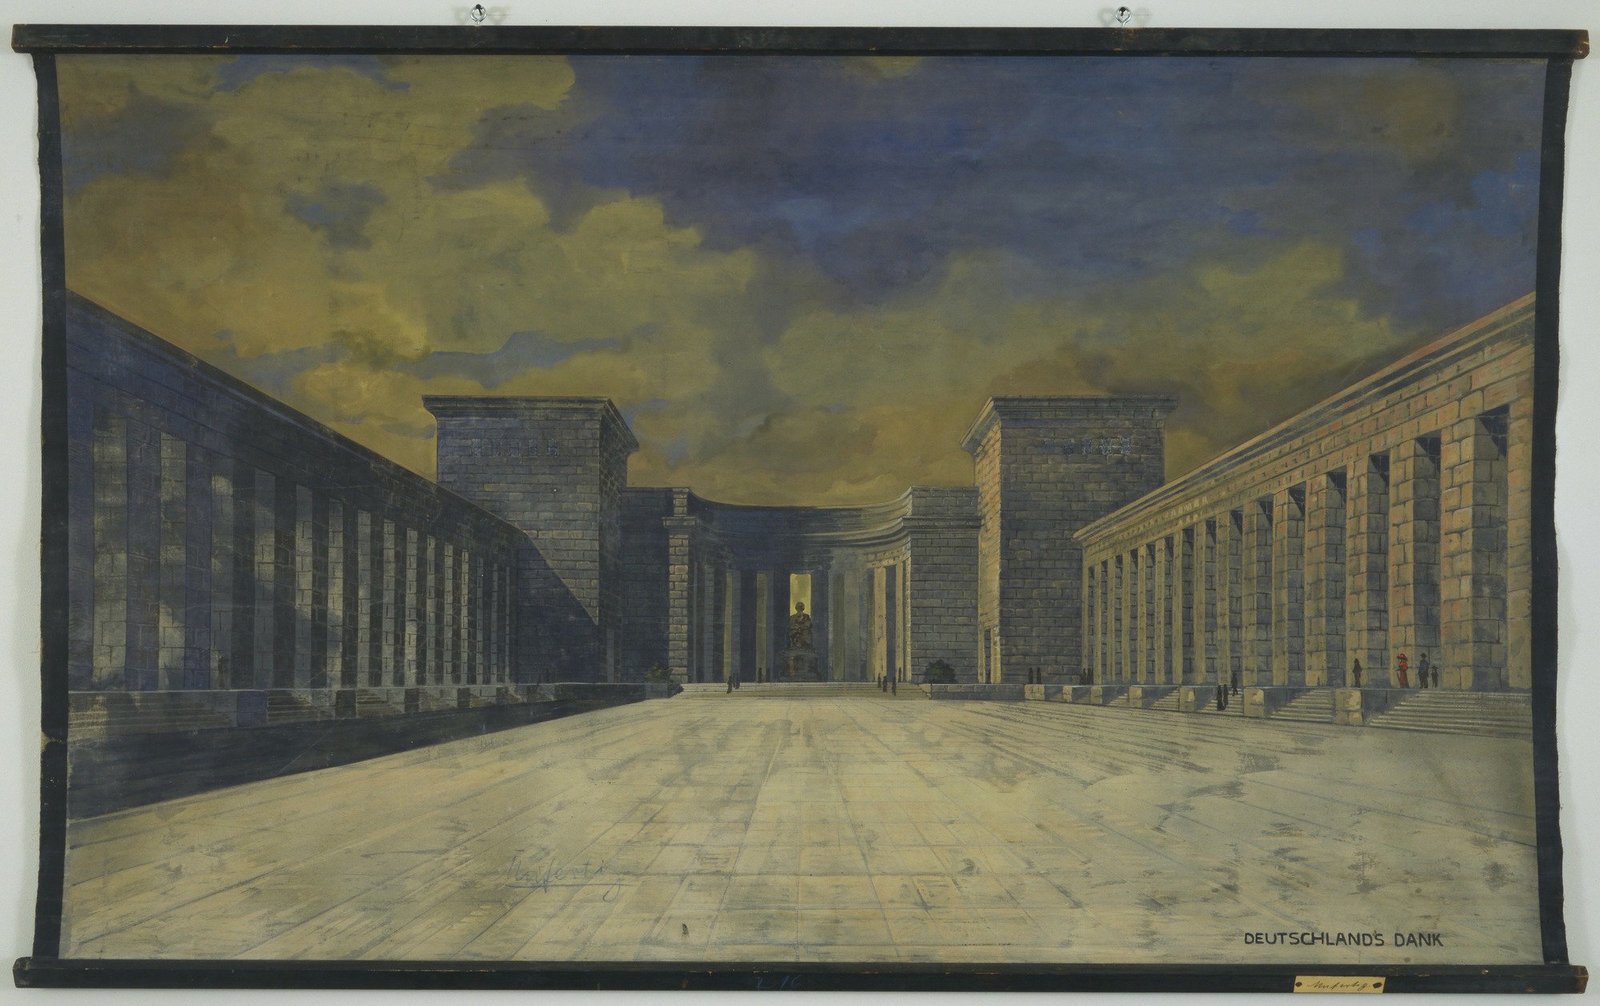 Конкурсный проект памятника Бисмарку. 1910&copy; MoMA, Mies van der Rohe Archive